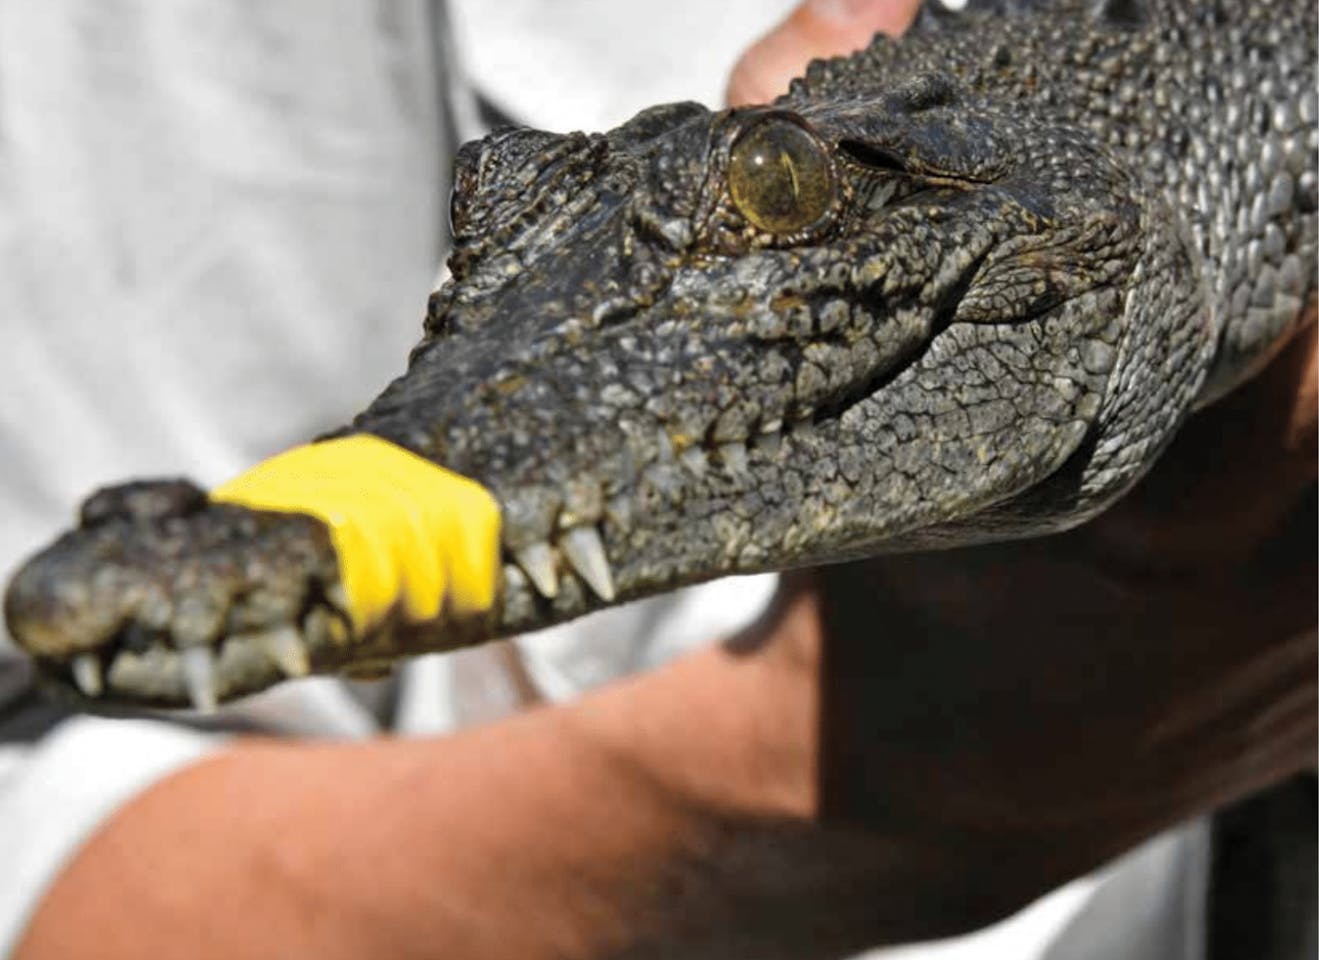 Singapore, Japan driving demand for crocodile-skin handbags as